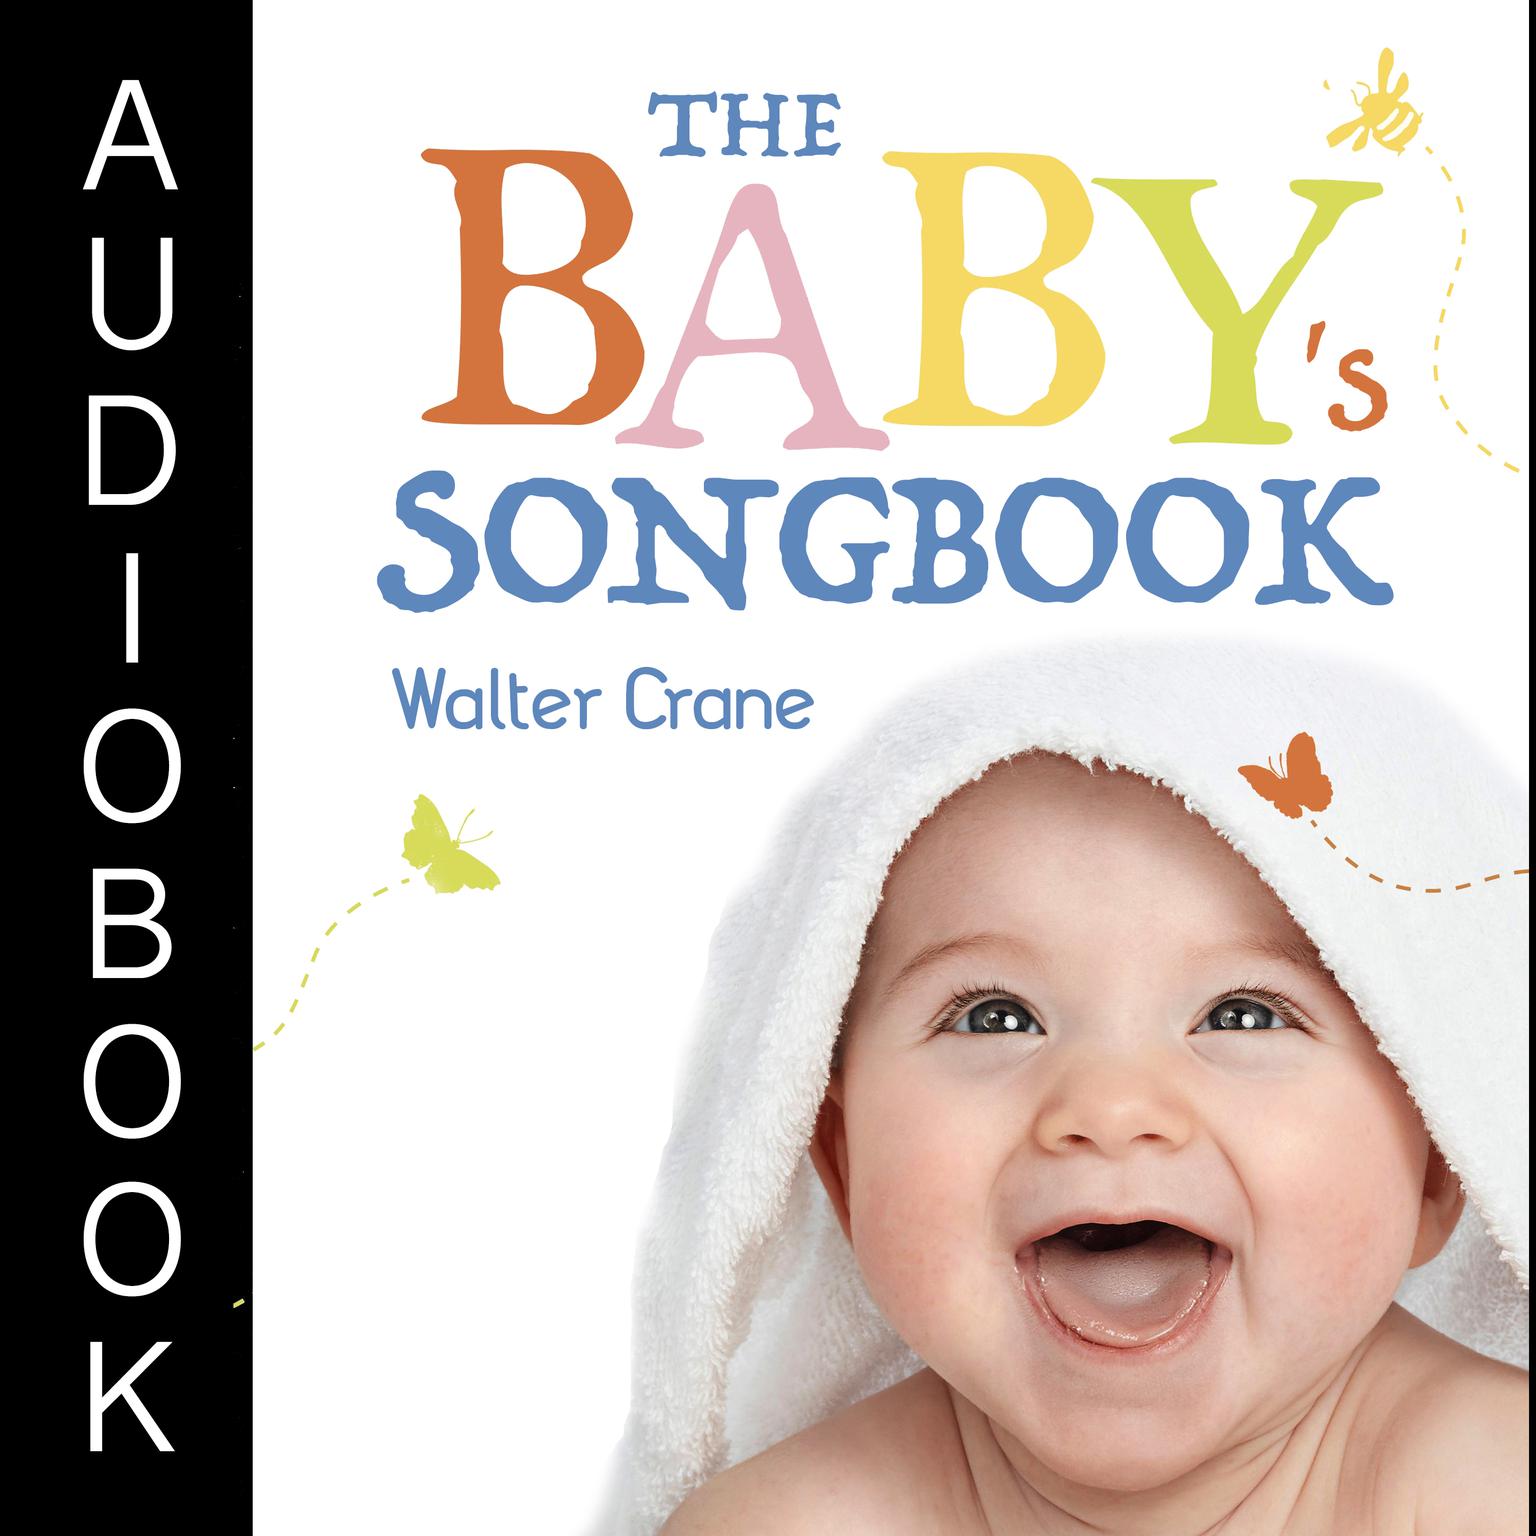 The Babys Songbook Audiobook, by Walter Crane